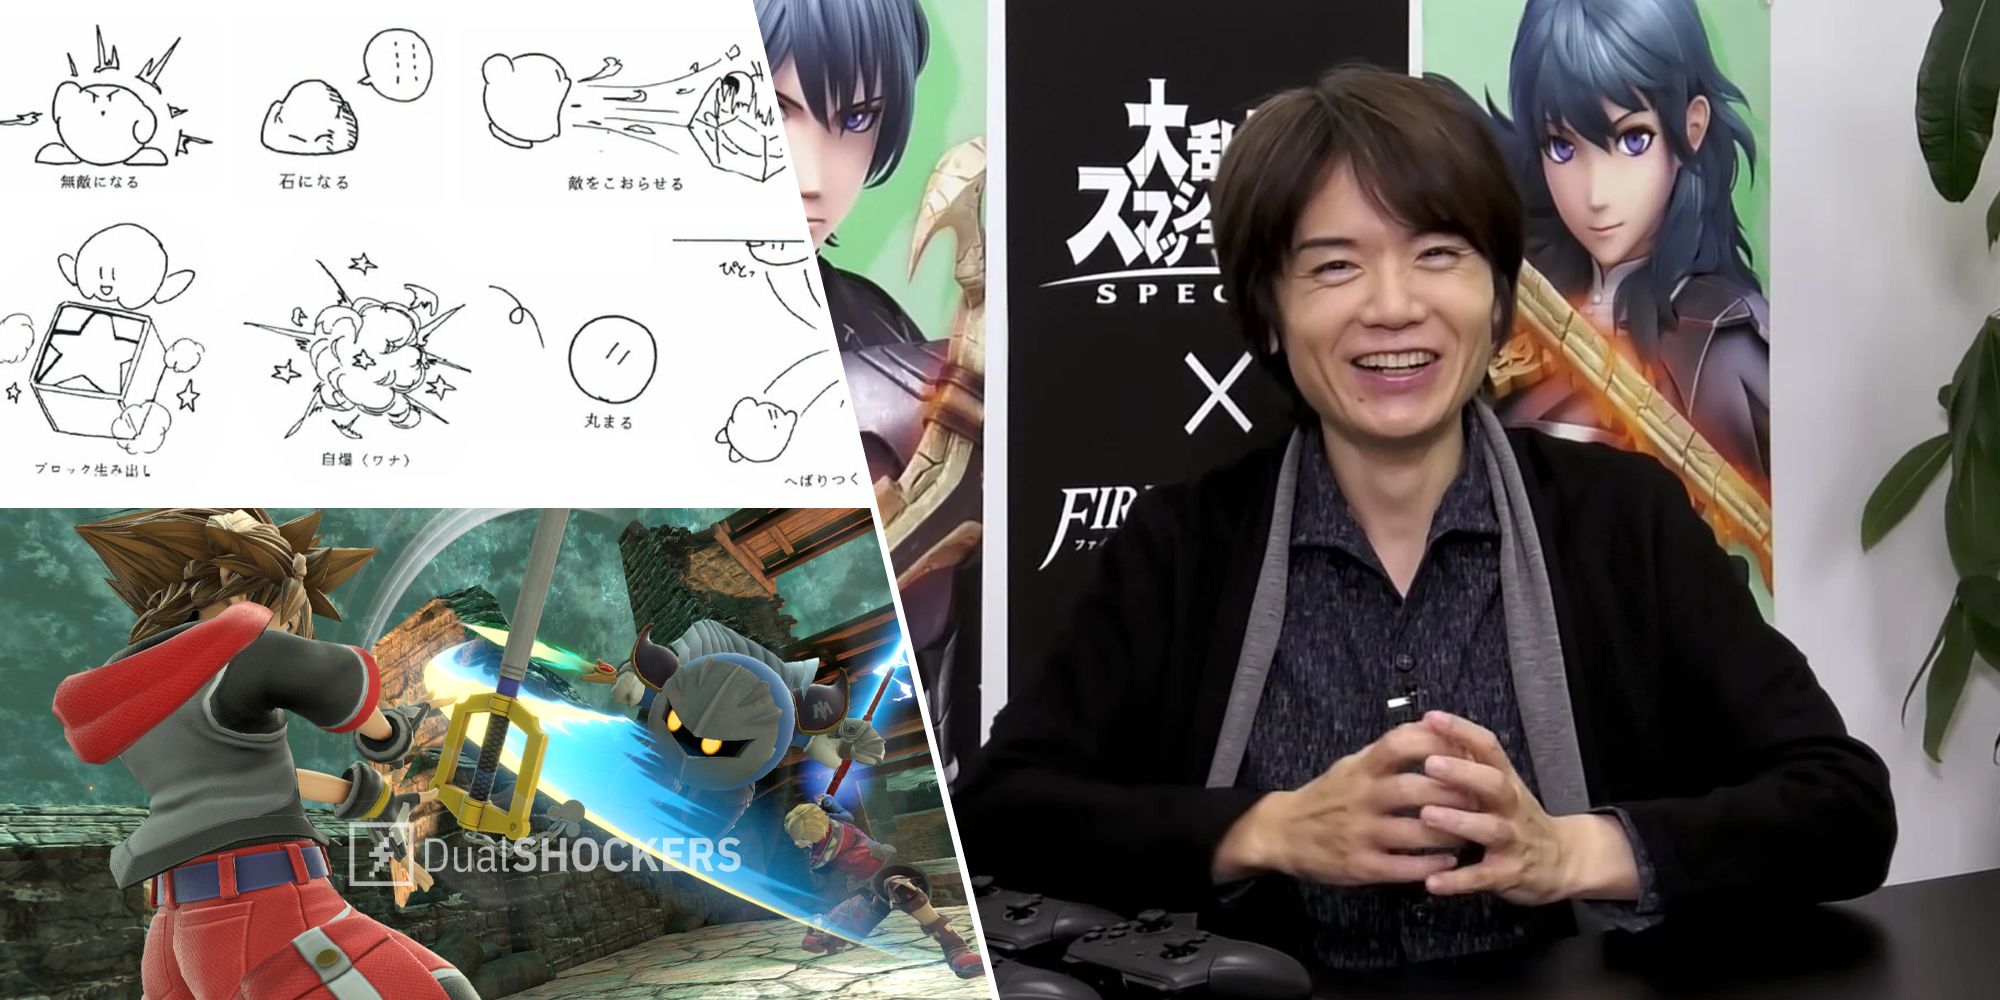 Kirby's Adventure original concept drawings on top left, Smash Bros on bottom left, Masahiro Sakurai on right